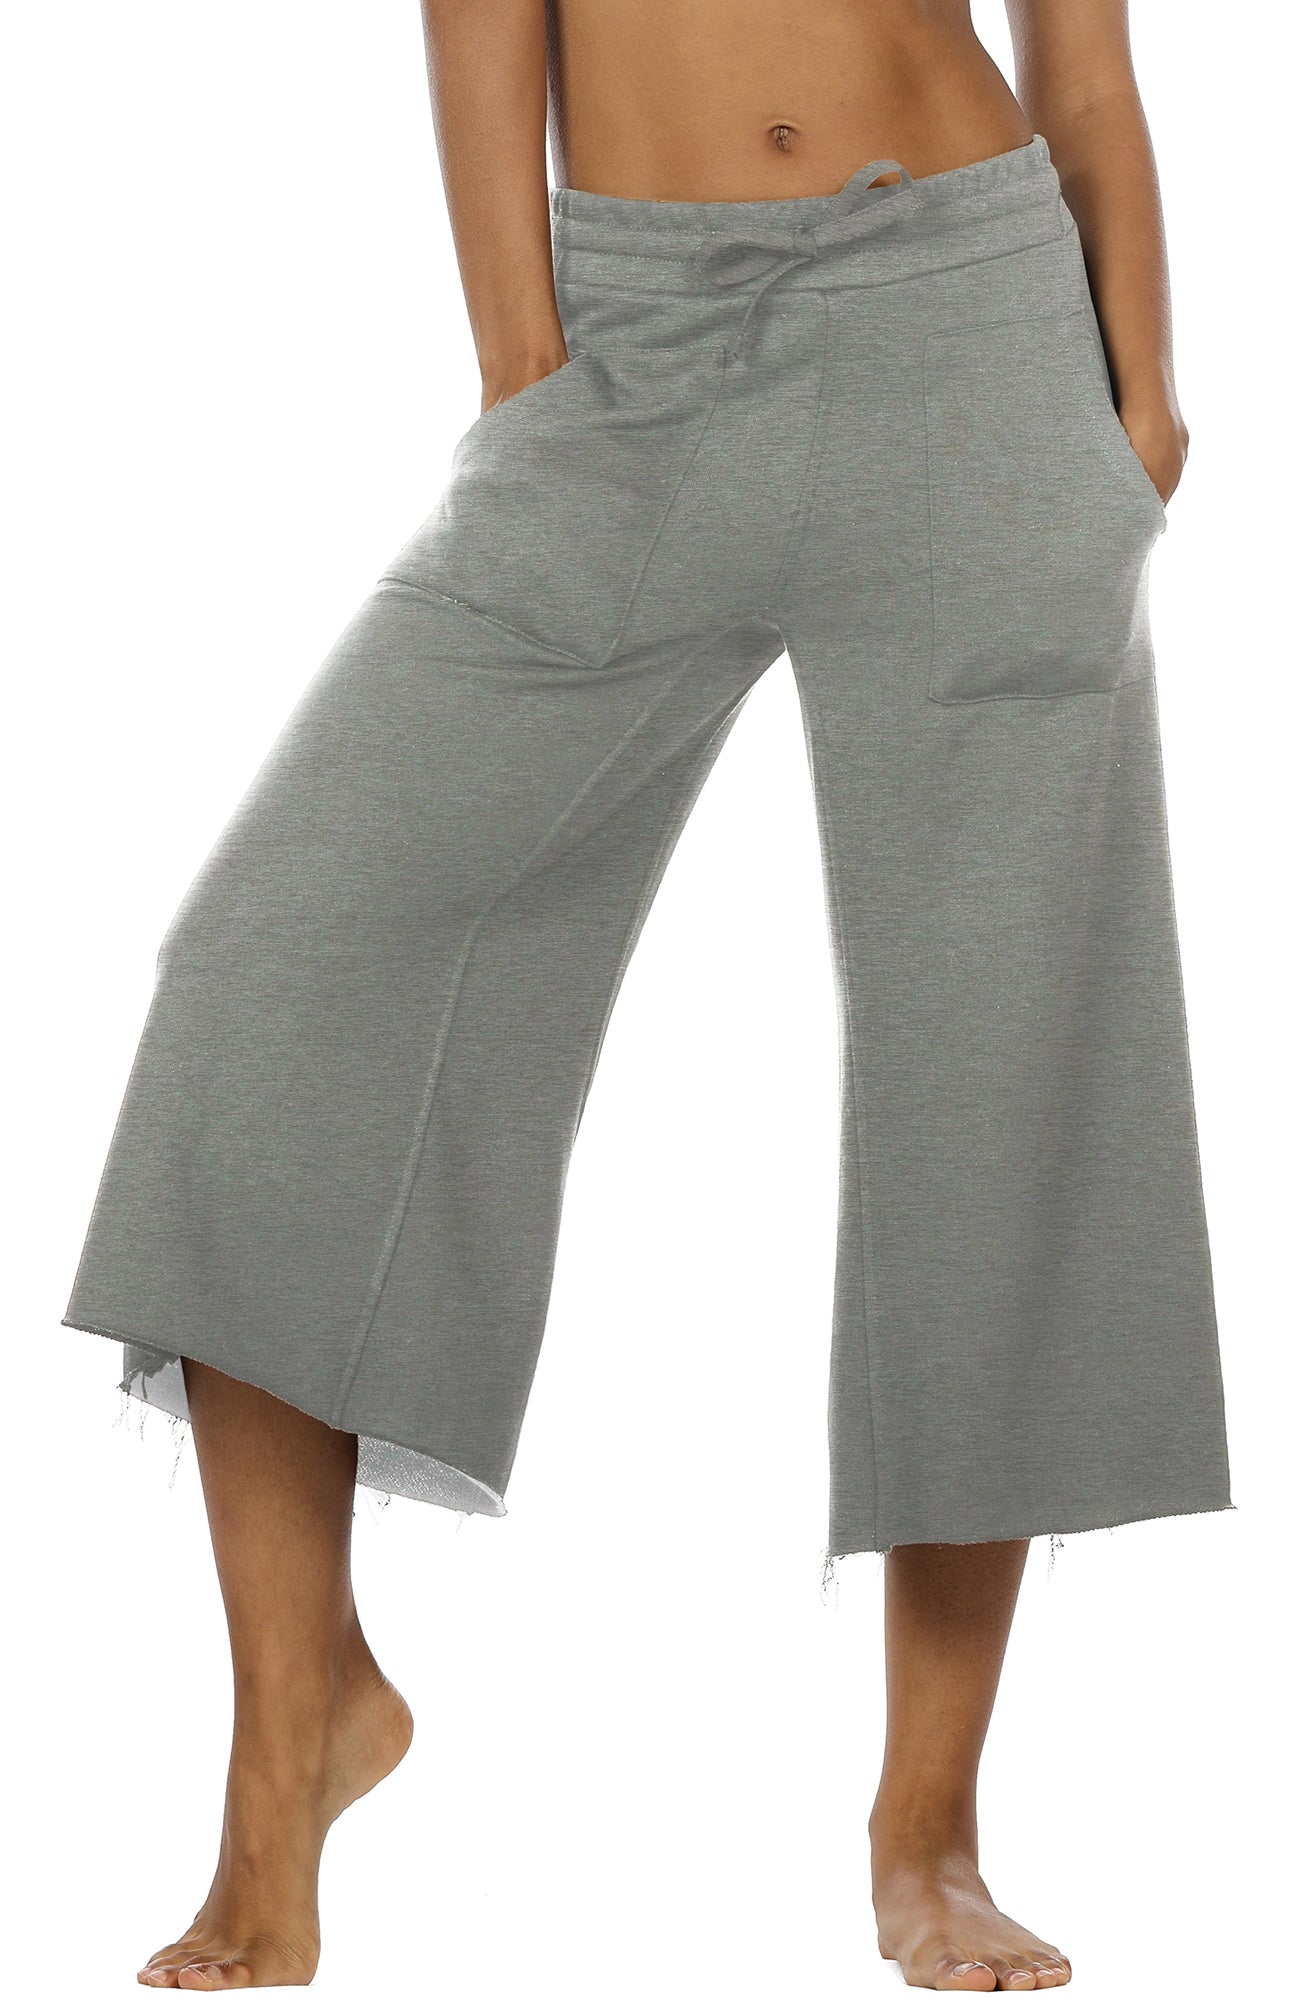 women's wide leg sweatpants with pockets